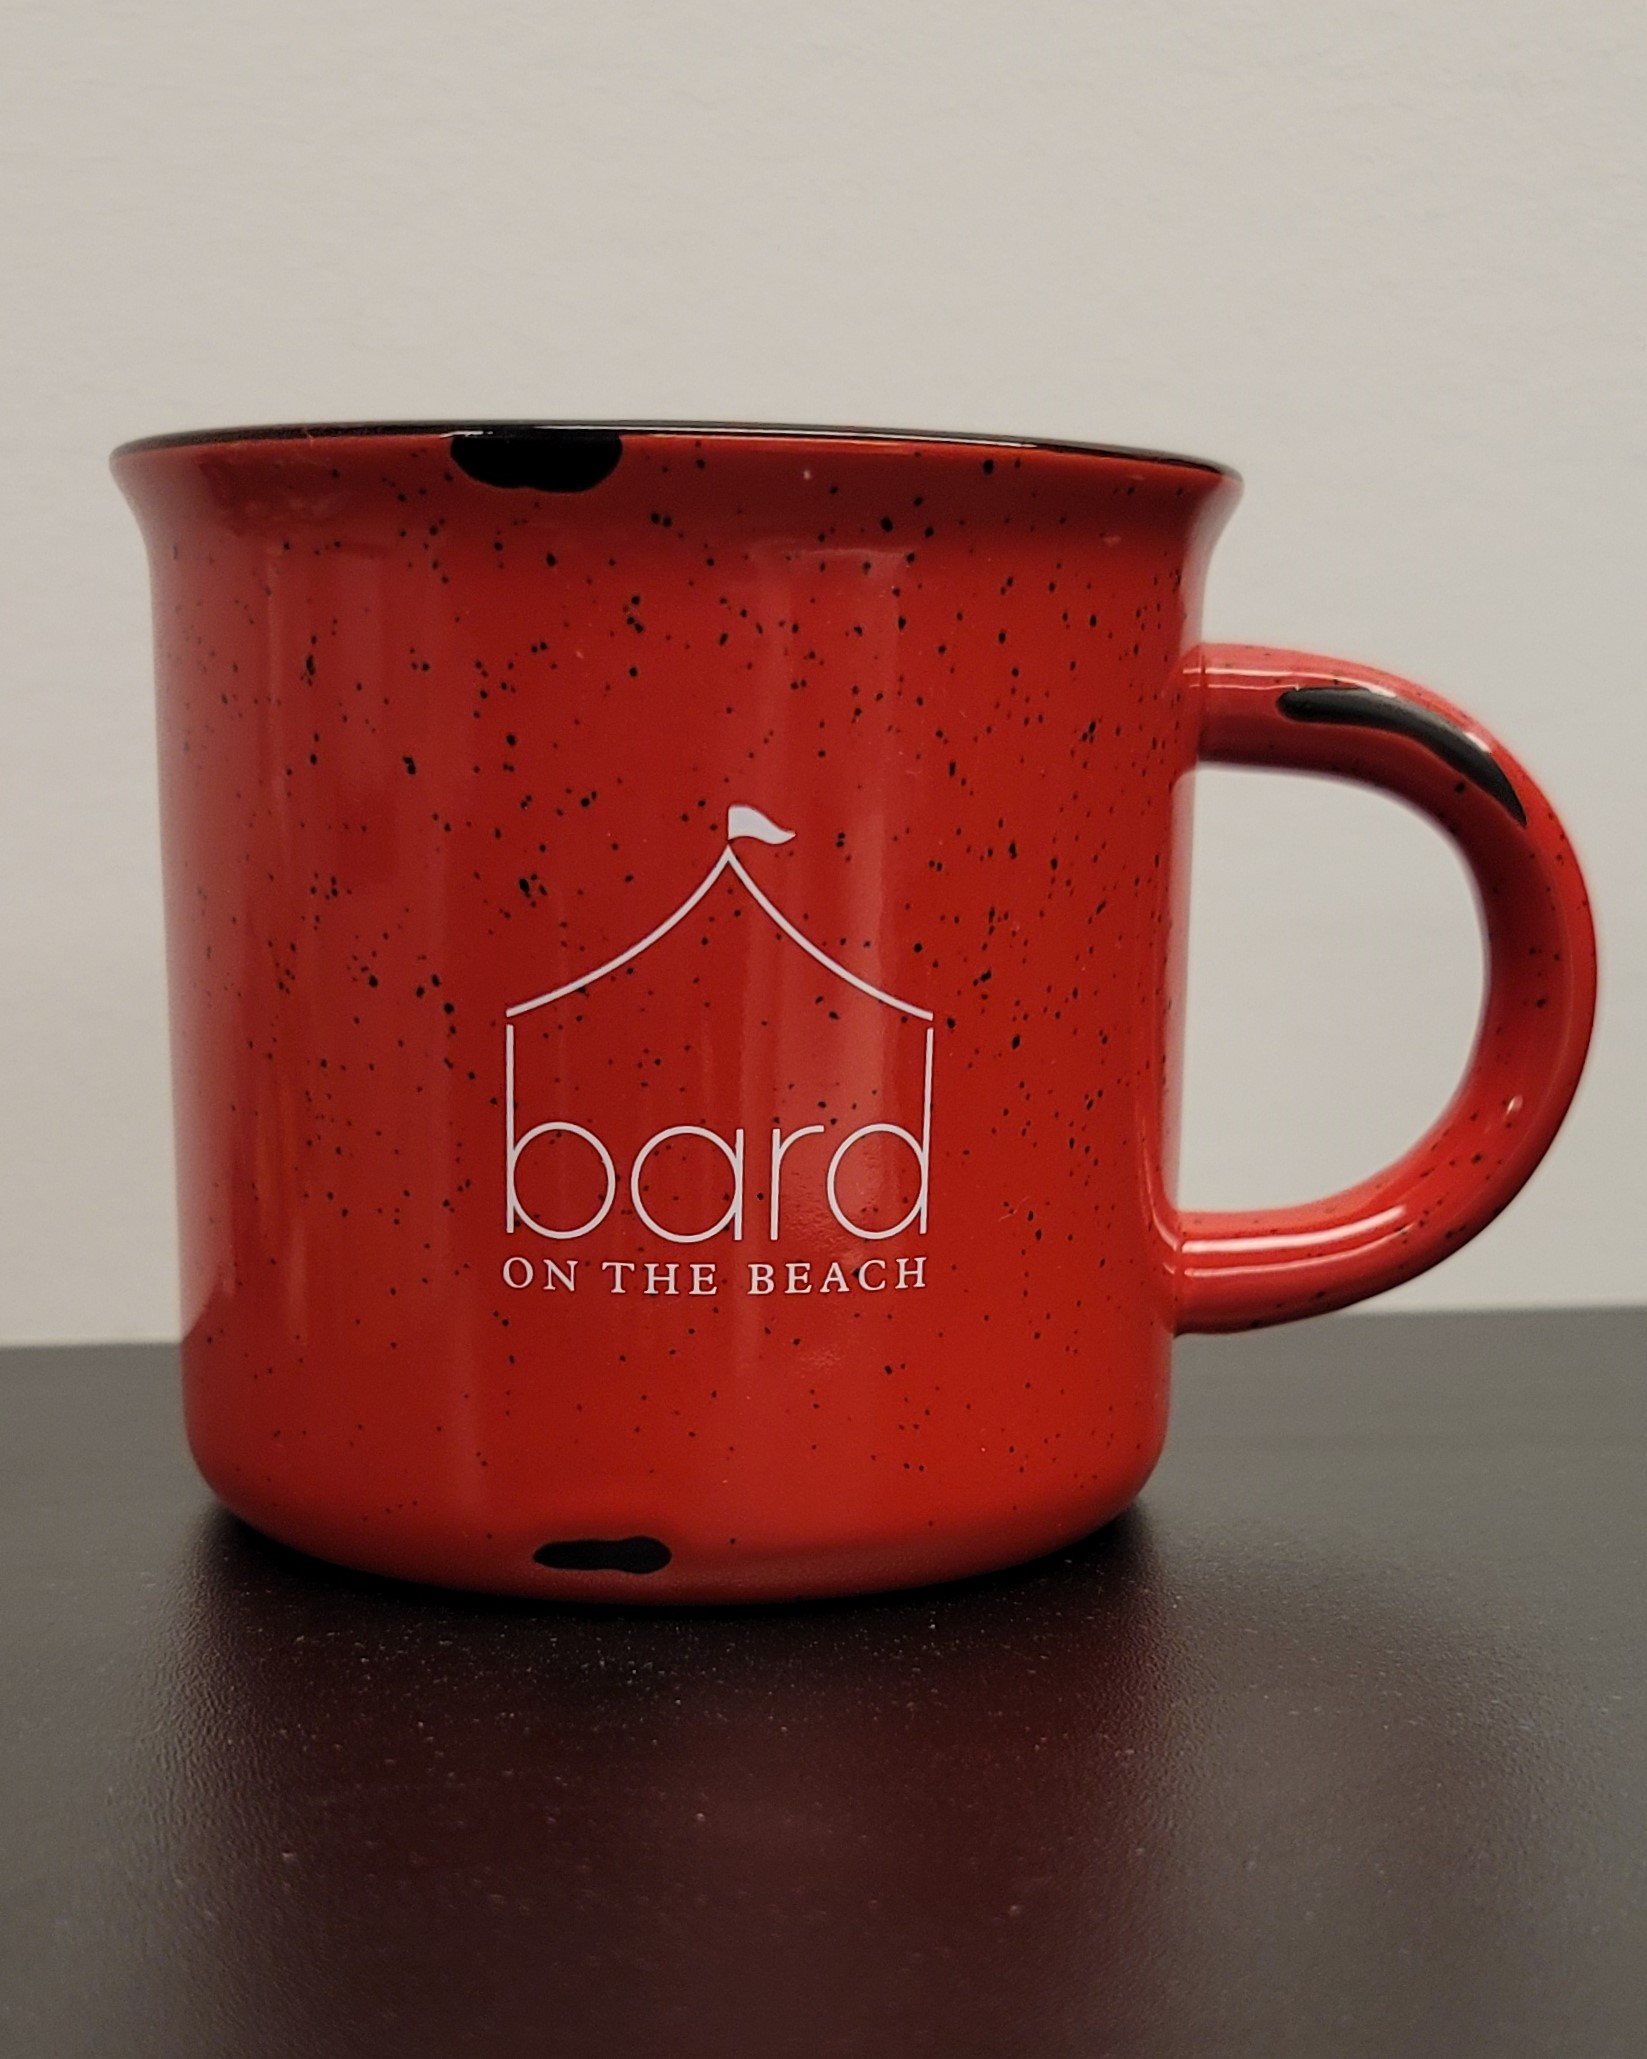 Bard on the Beach red rustic mug